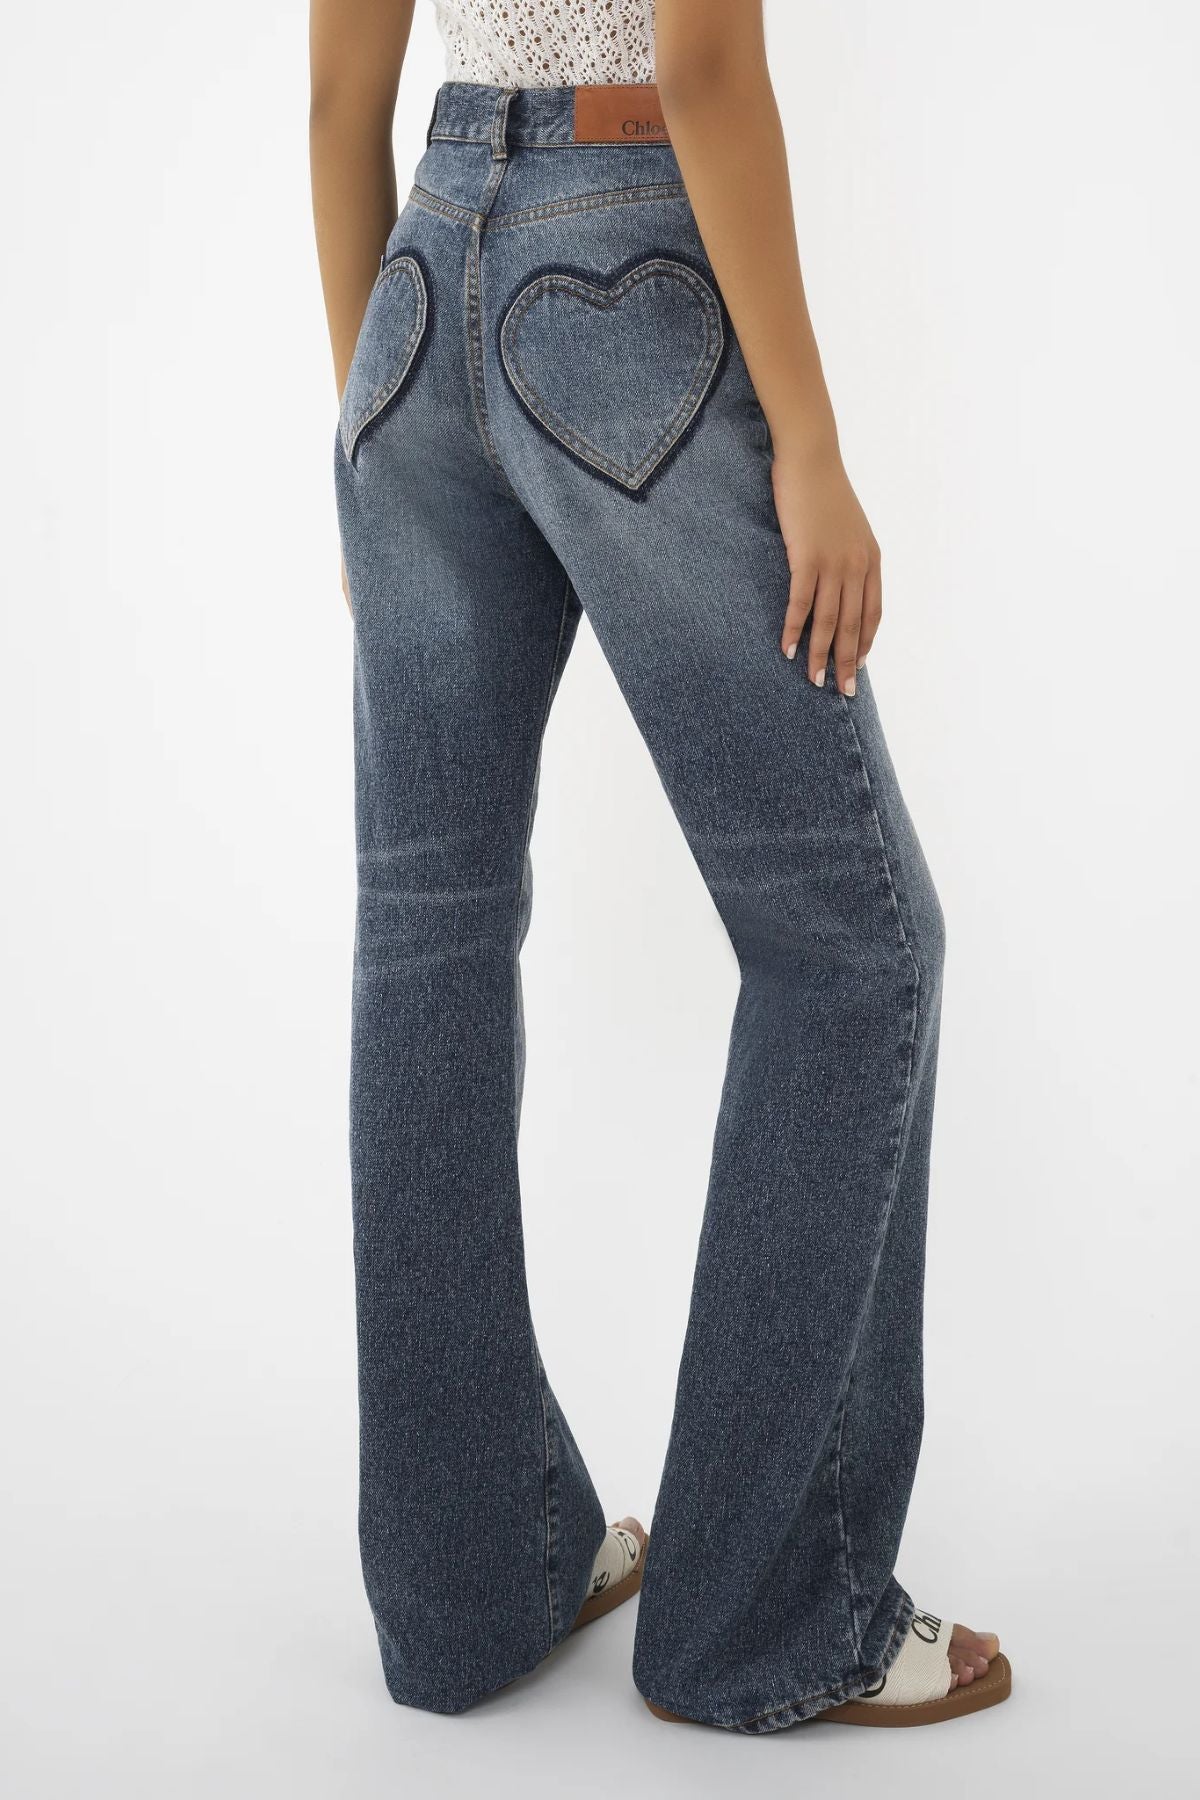 Chloé Recycled Denim Jeans - Faded Denim